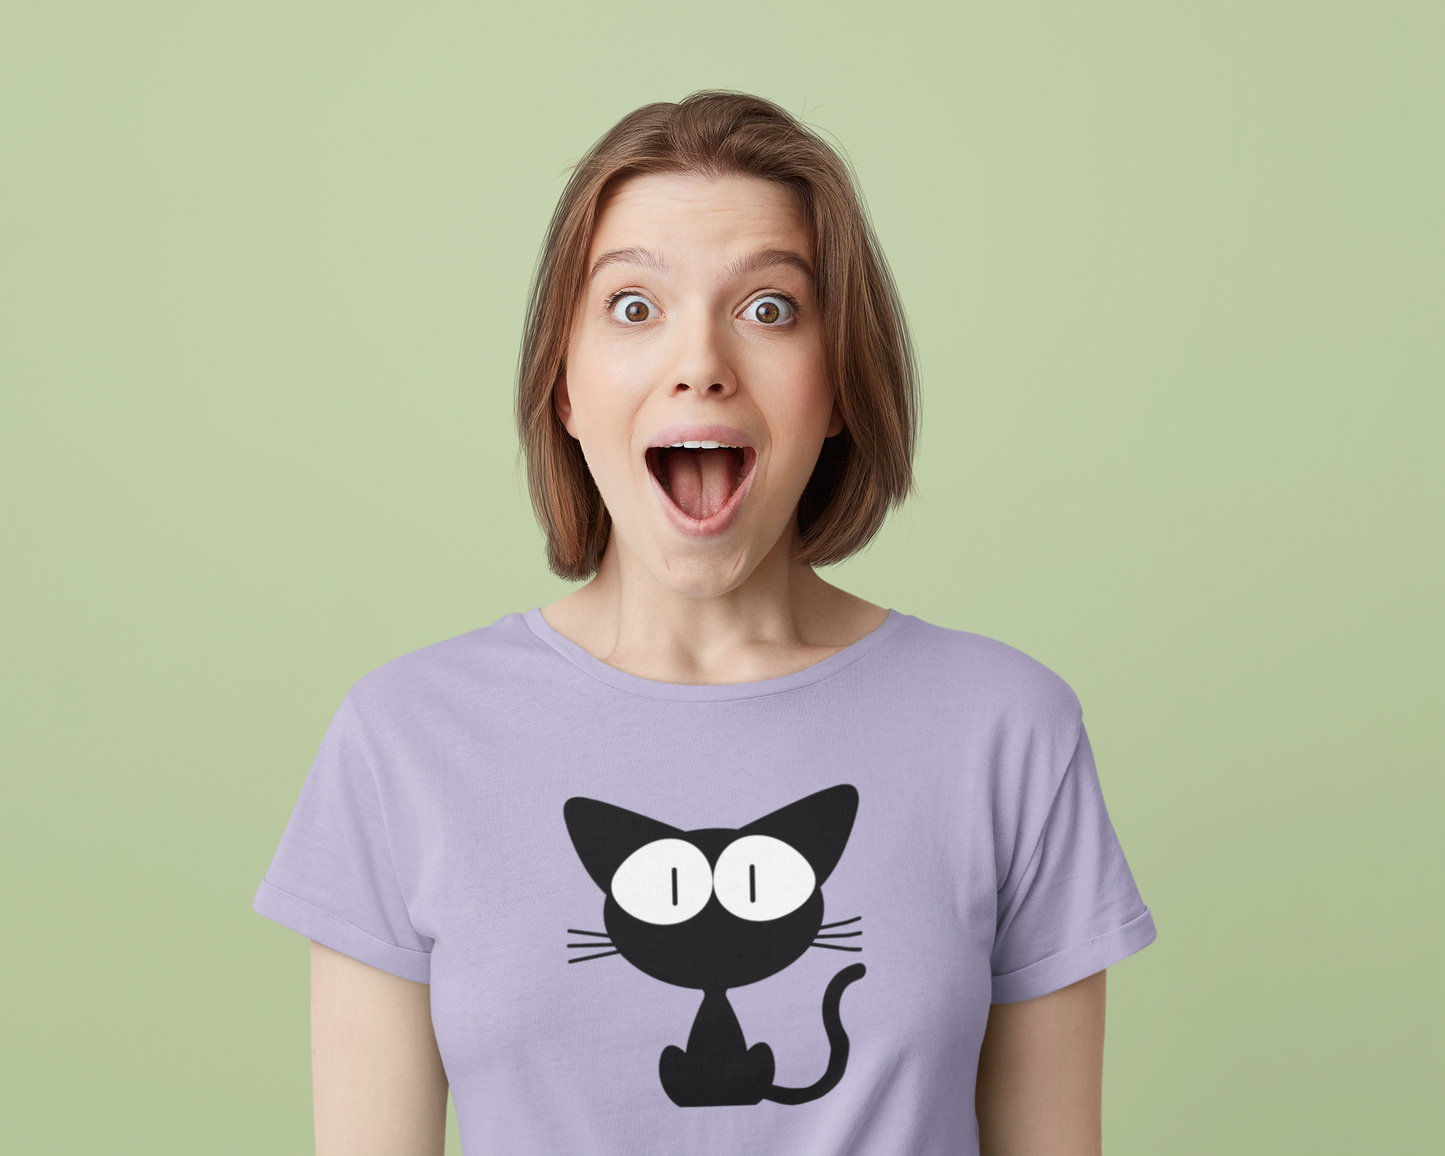 Women Graphic T-Shirt - Cat